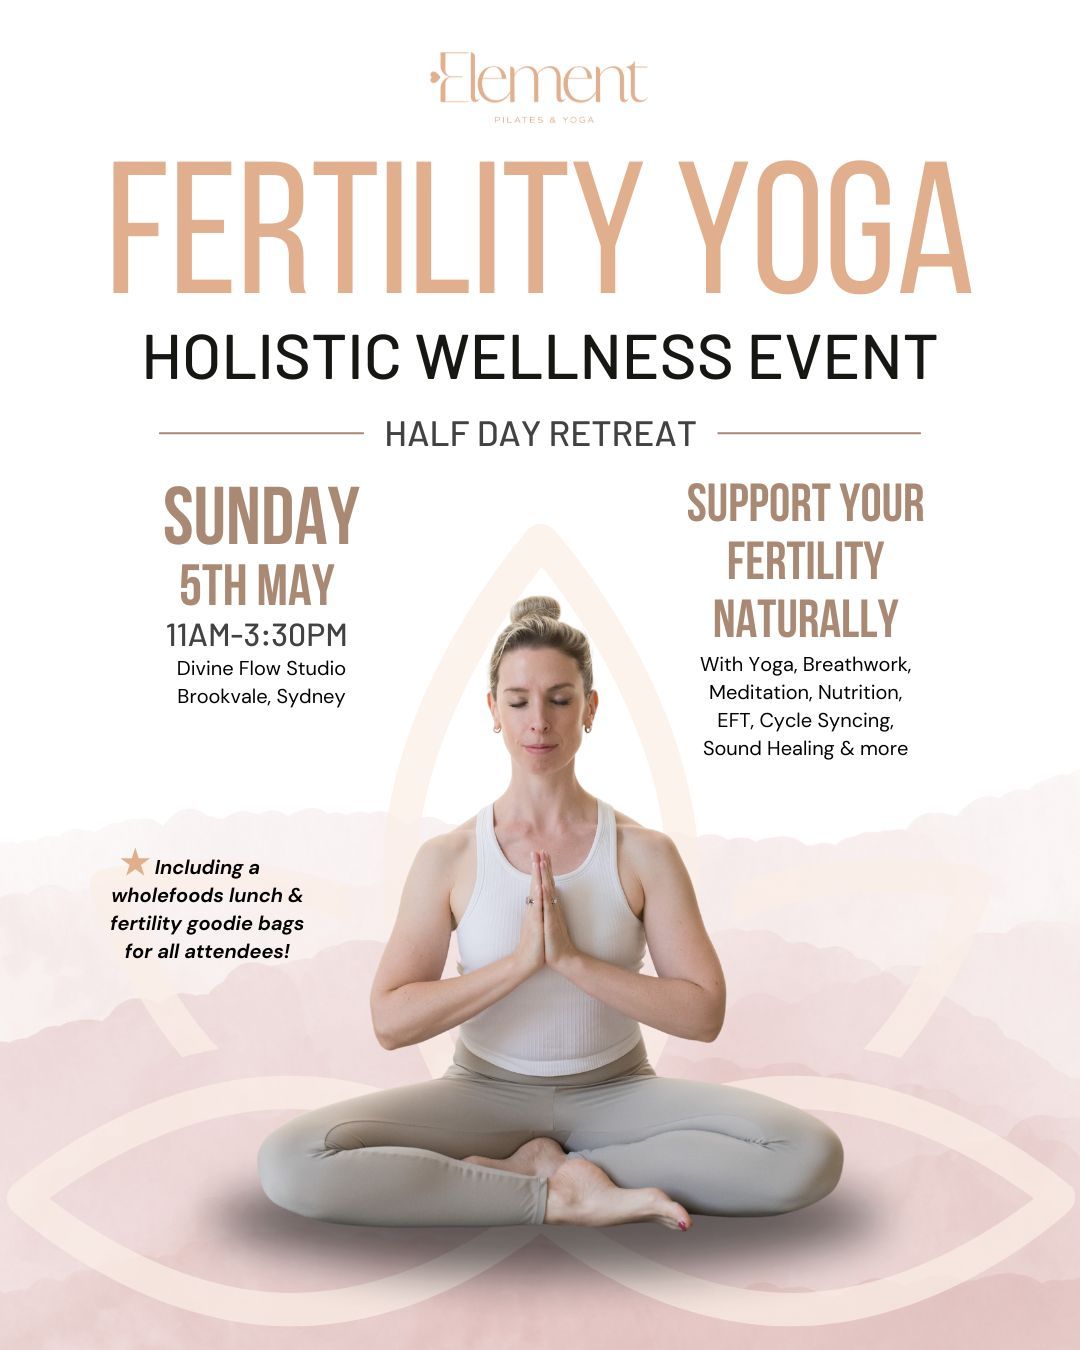 Fertility Yoga Holistic Wellness Event: Half Day Retreat